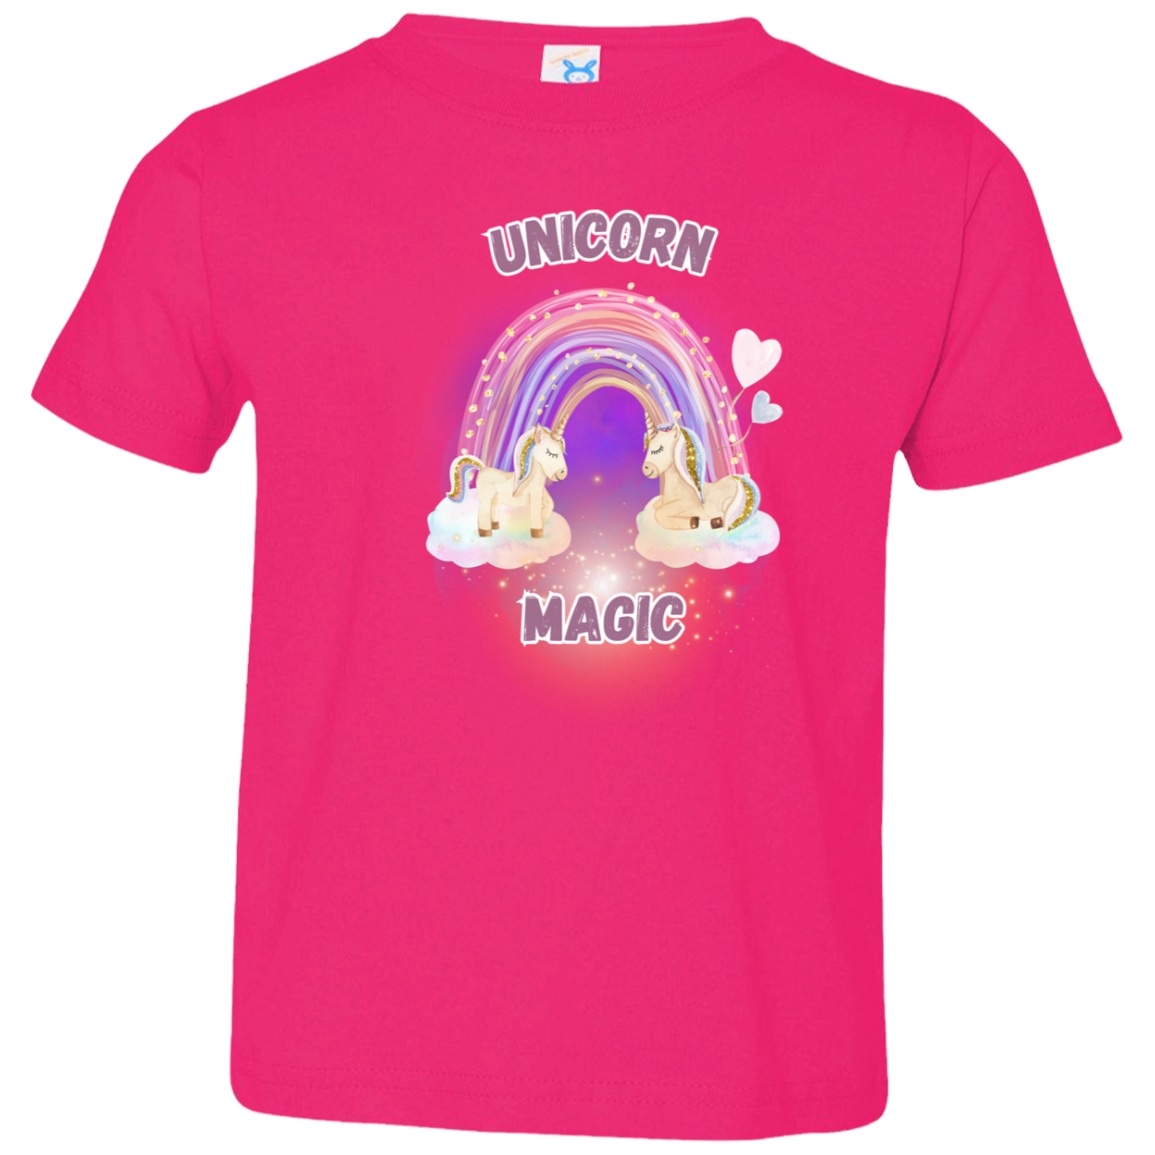 Unicorn Magic - Girls' Toddler Jersey T-Shirt